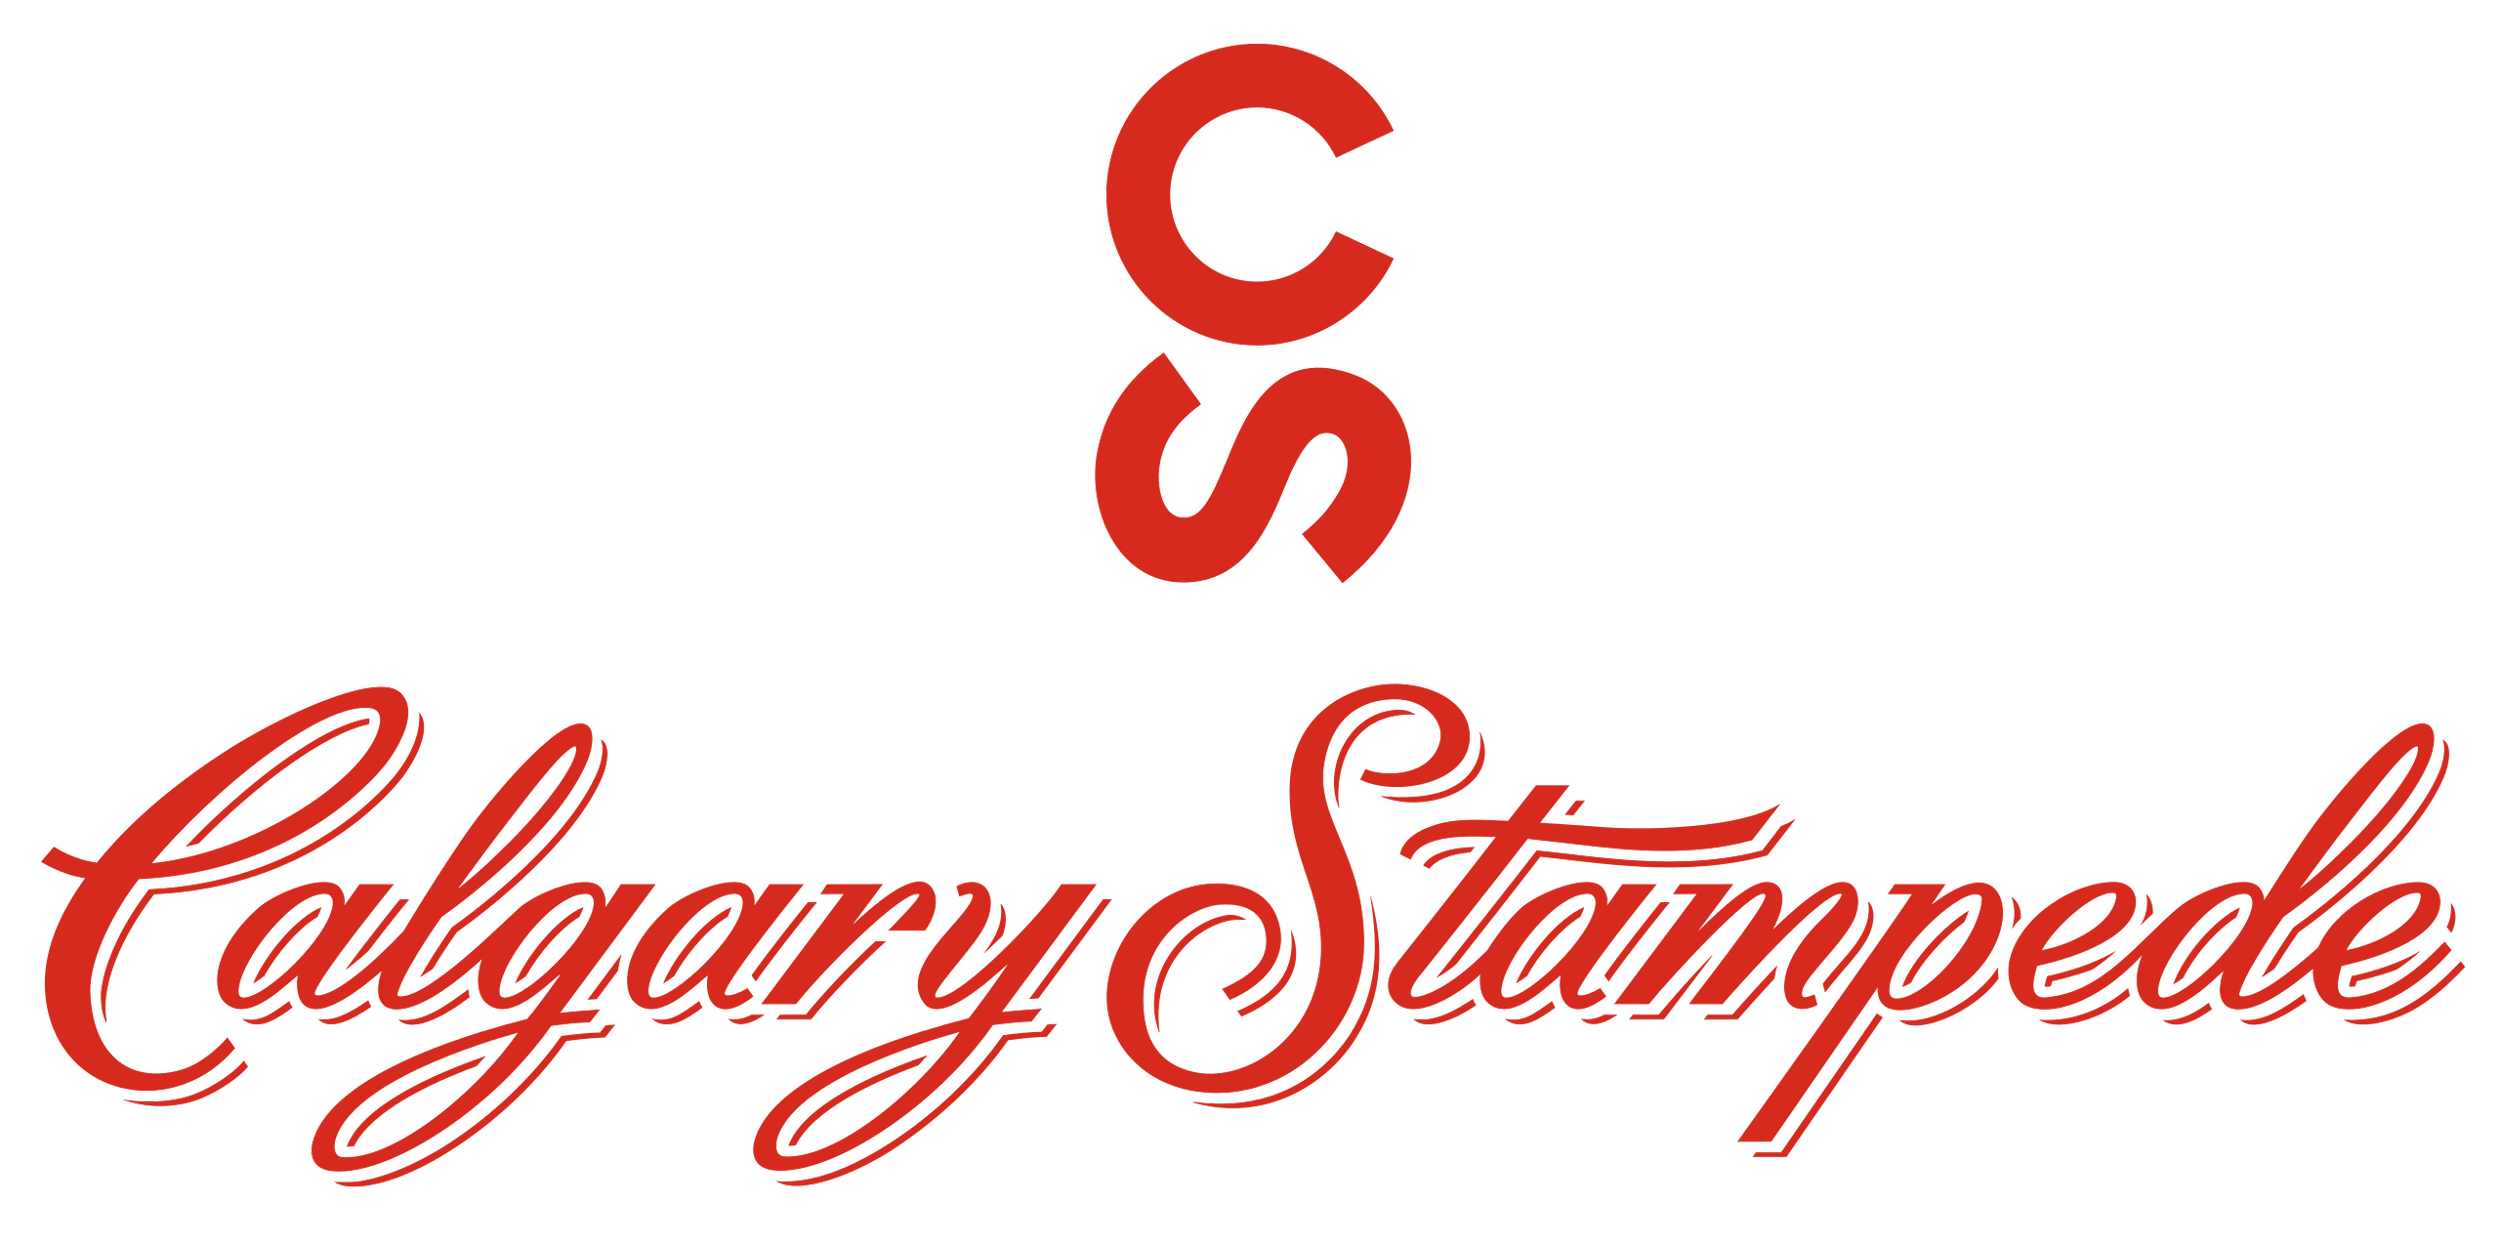 2560px-Calgary_Stampede_Logo.svg.png